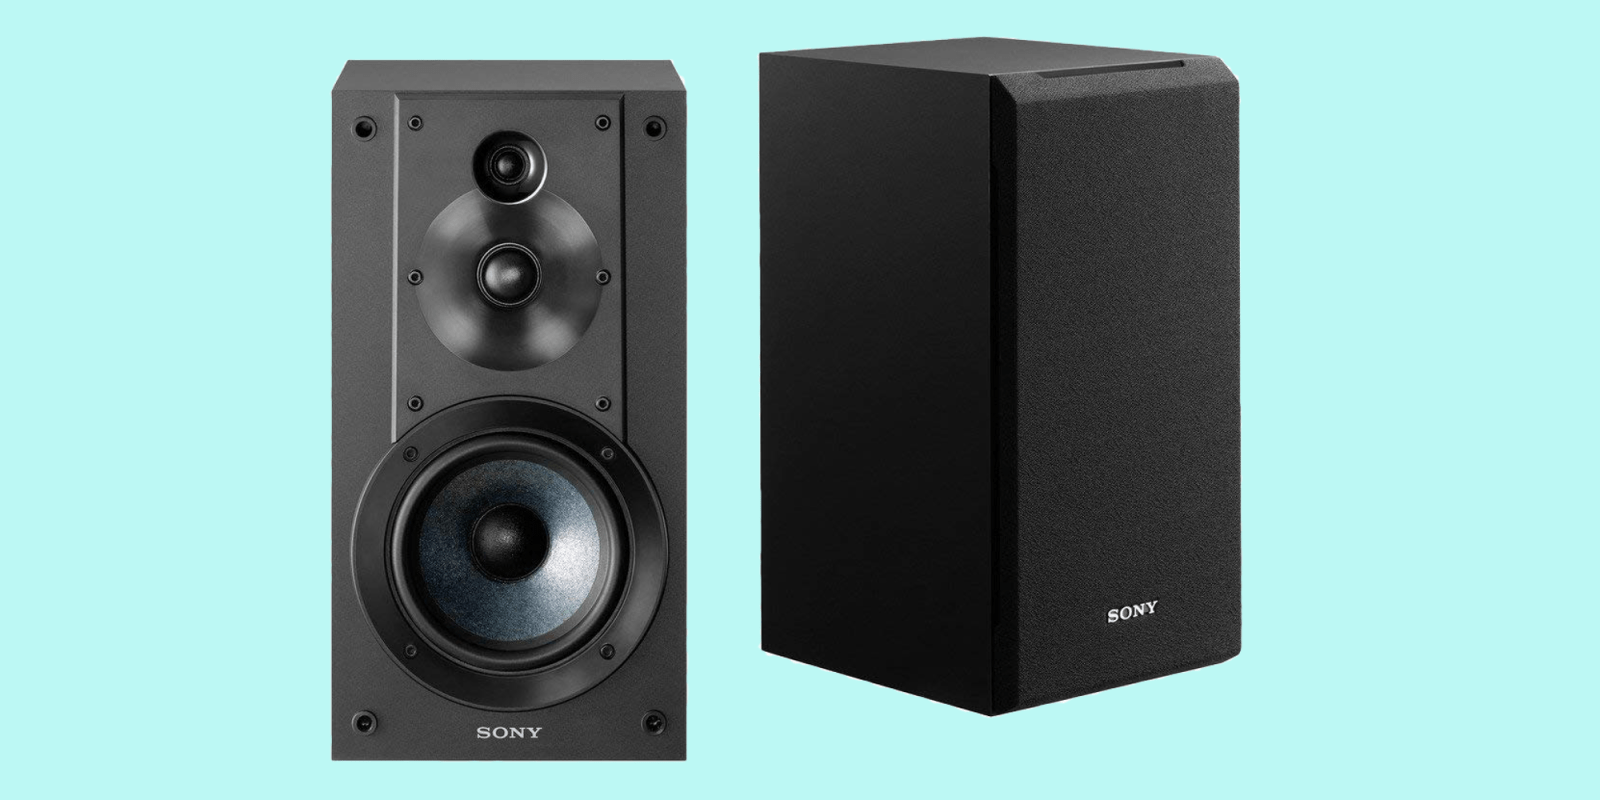 Sony S 3 Way Bookshelf Speaker System Drops To New Amazon All Time